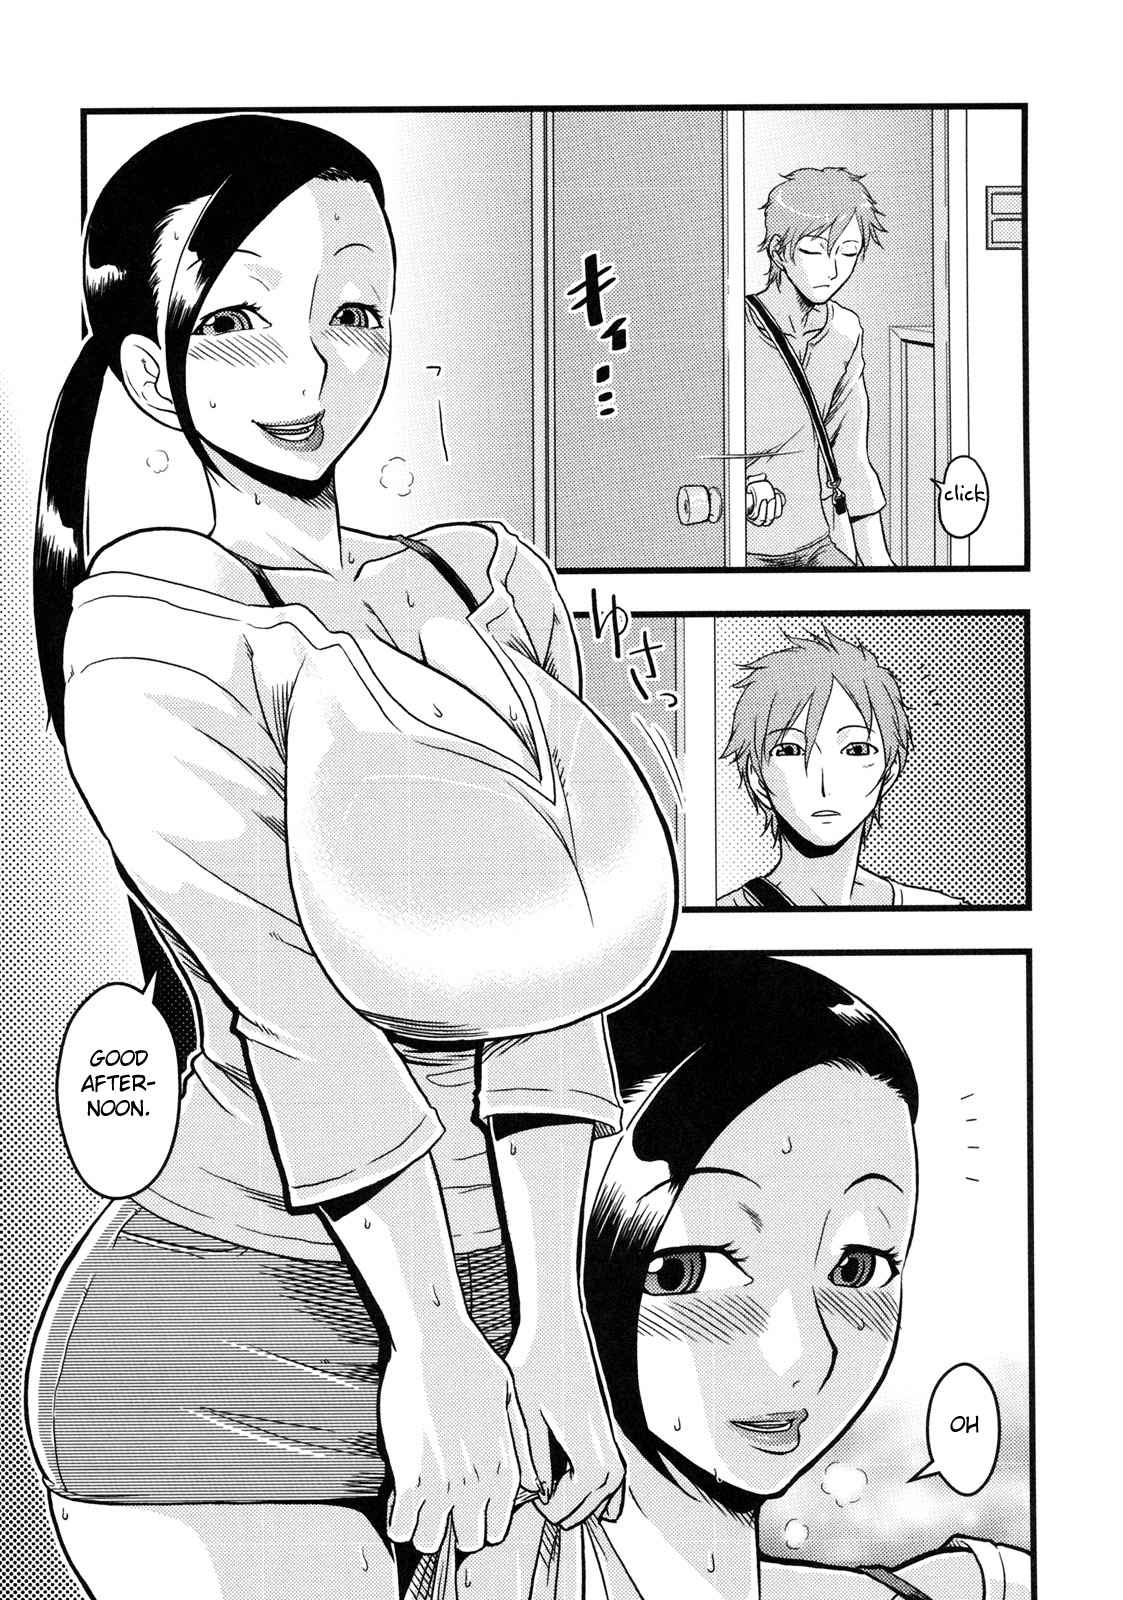 Reading Provocative Housewife Hentai 1 Provocative Housewife [oneshot] Page 1 Hentai Manga